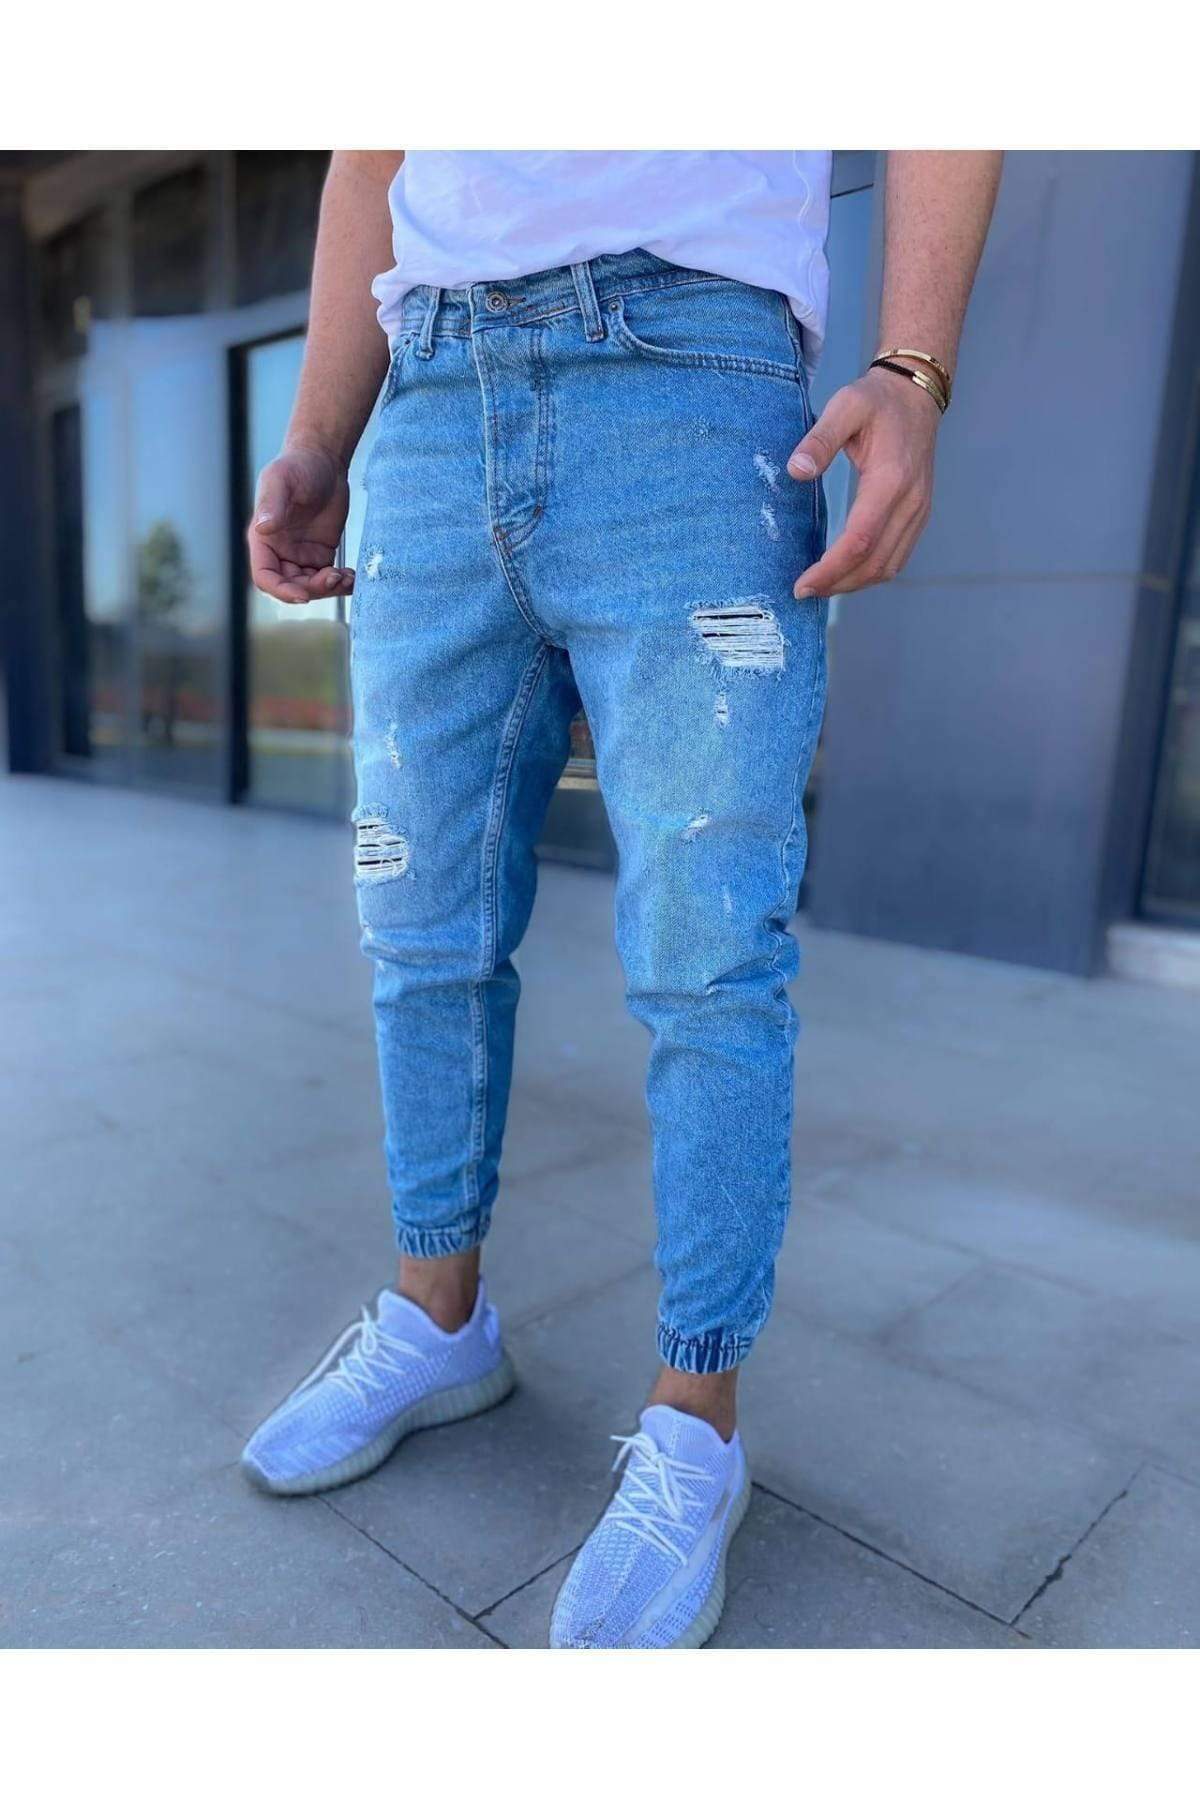 Blue Jogger Jeans